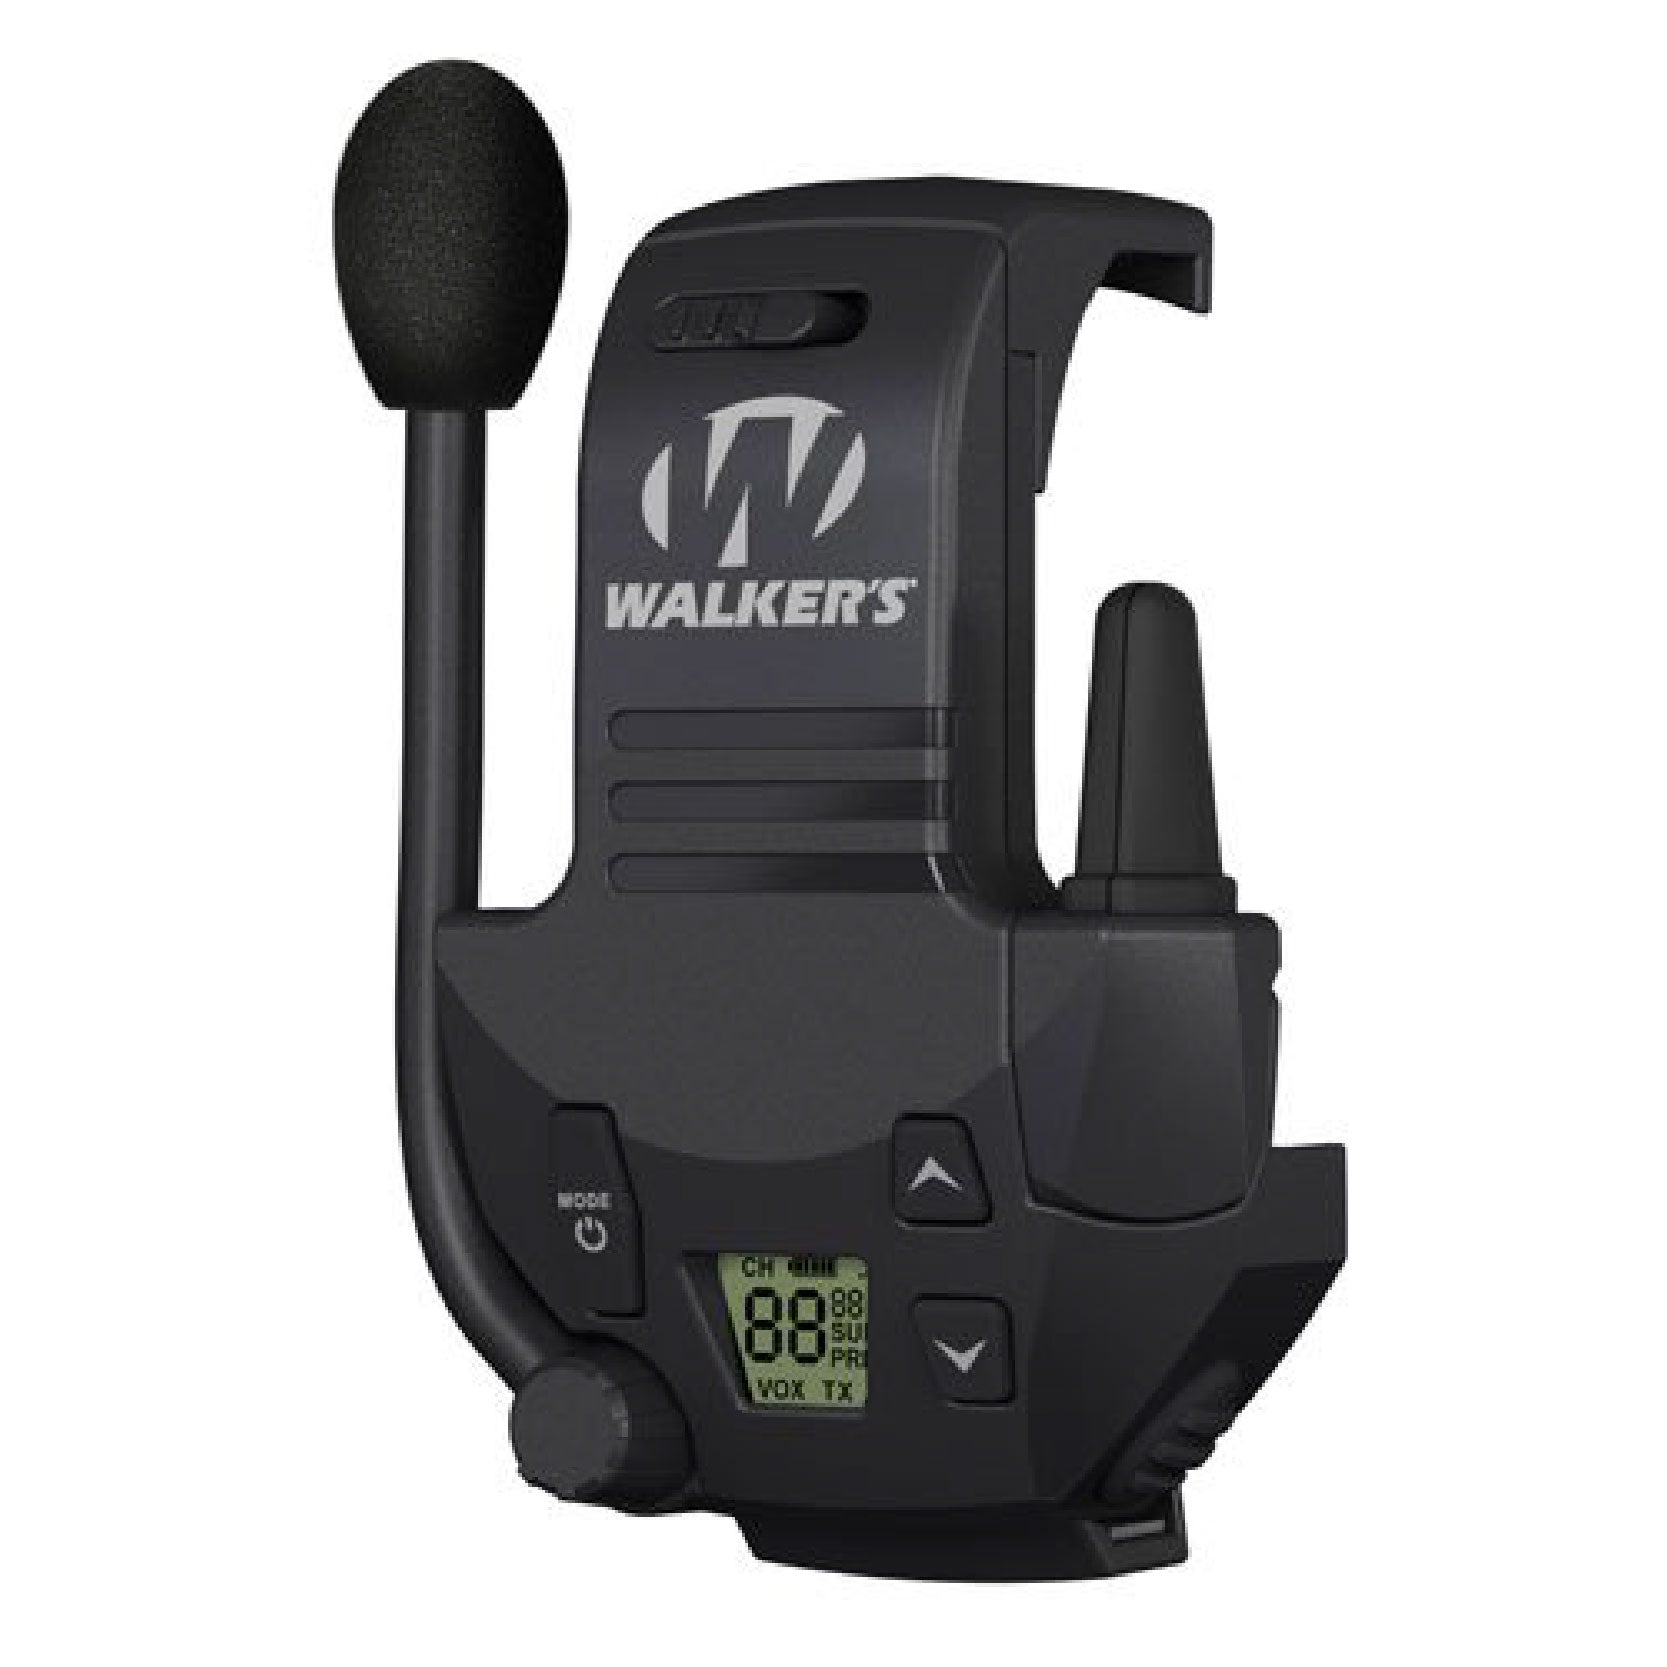 Walker's Razor Walkie Talkie Attachment, Handsfree Communication up to 3 Miles